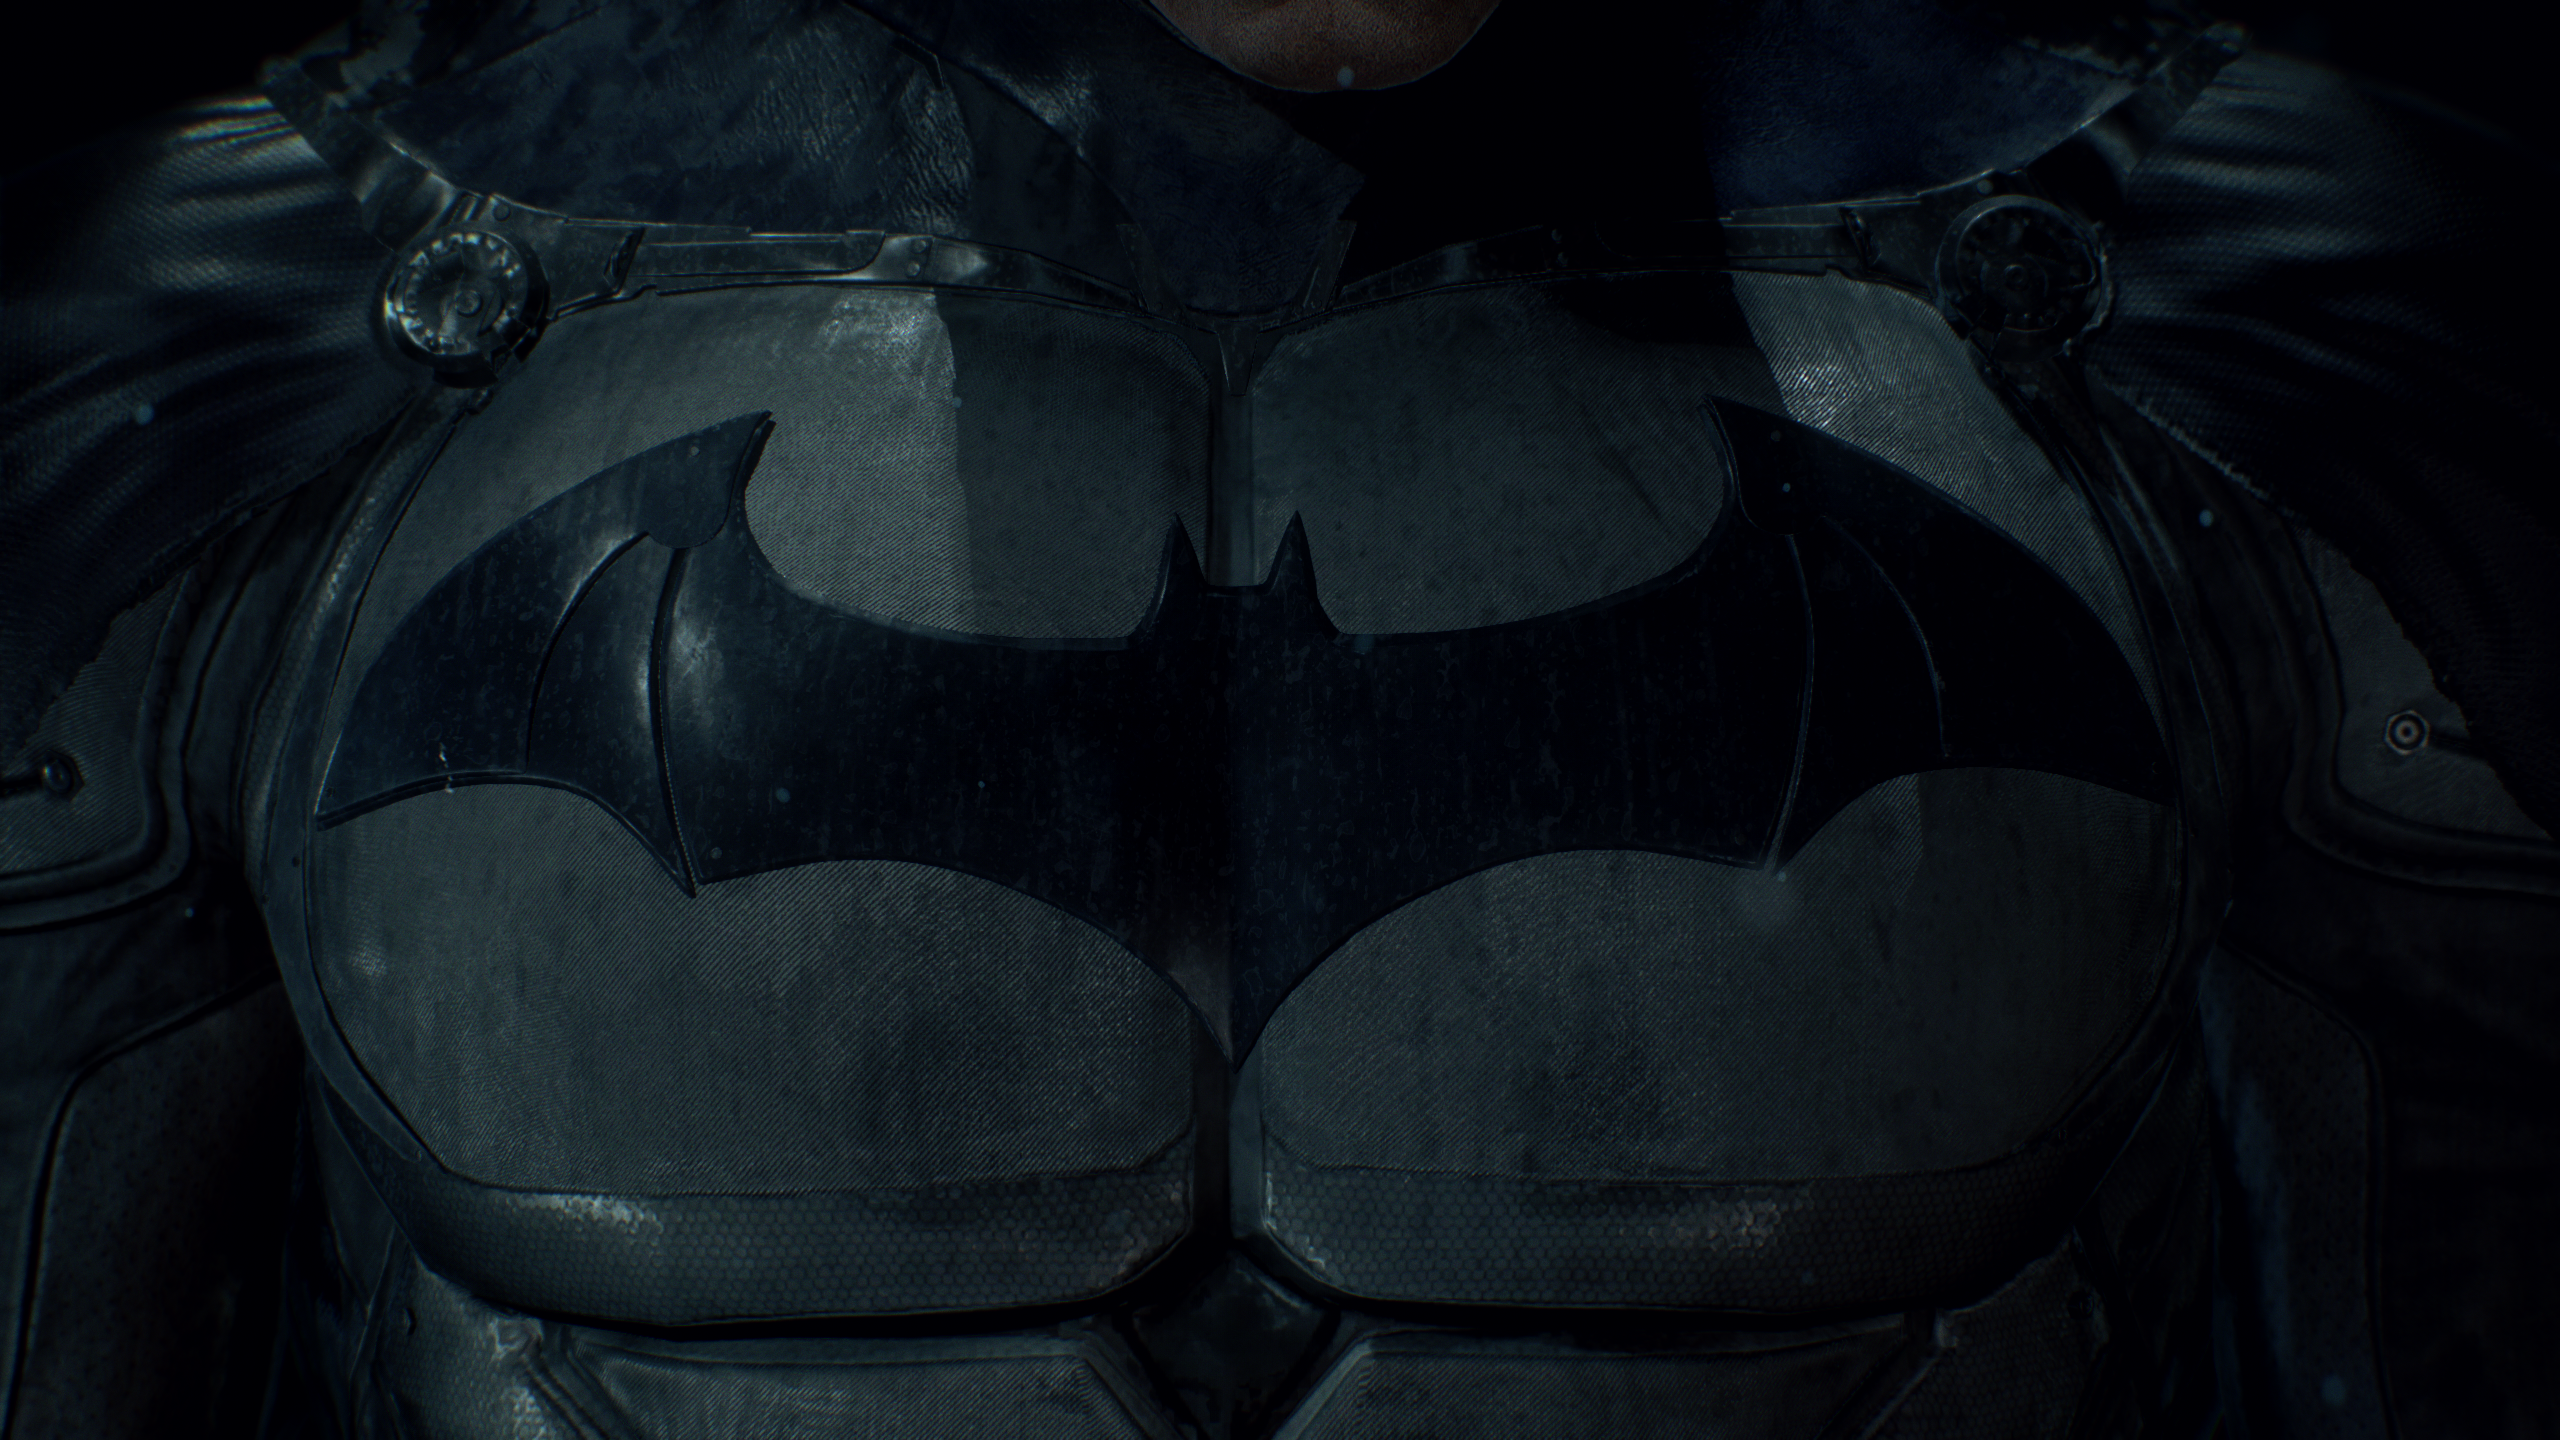 General 2560x1440 Batman: Arkham Knight Batman video games screen shot superhero DC Comics Rocksteady Studios